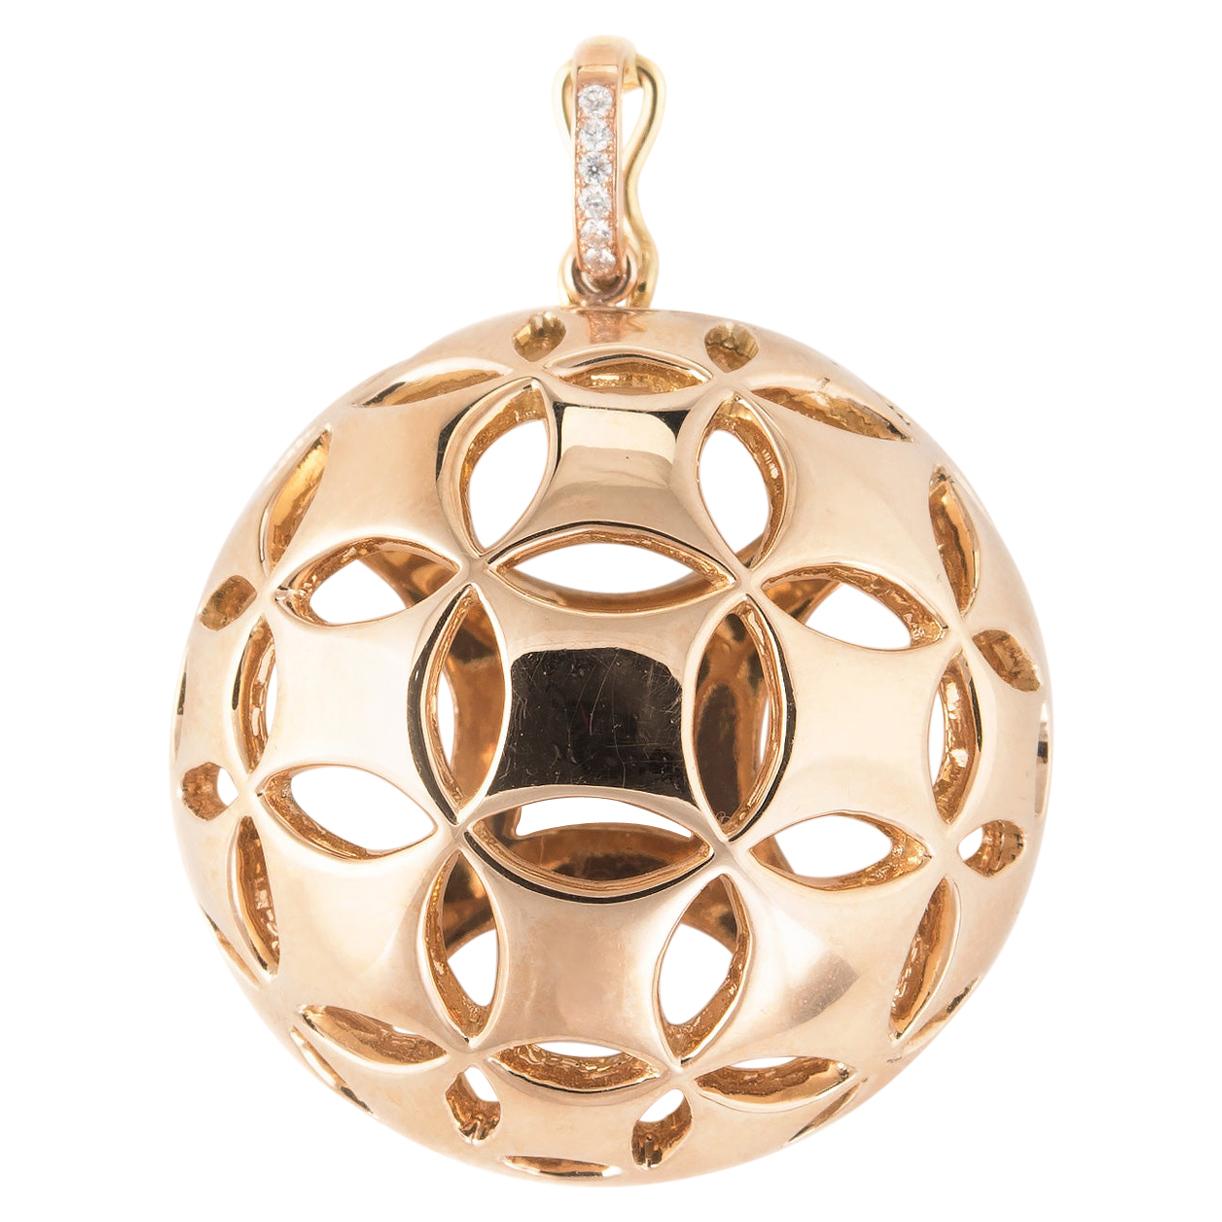 Antonini Diamond Pendant 18 Karat Gold Circle Dome Estate Fine Jewelry, Italy For Sale